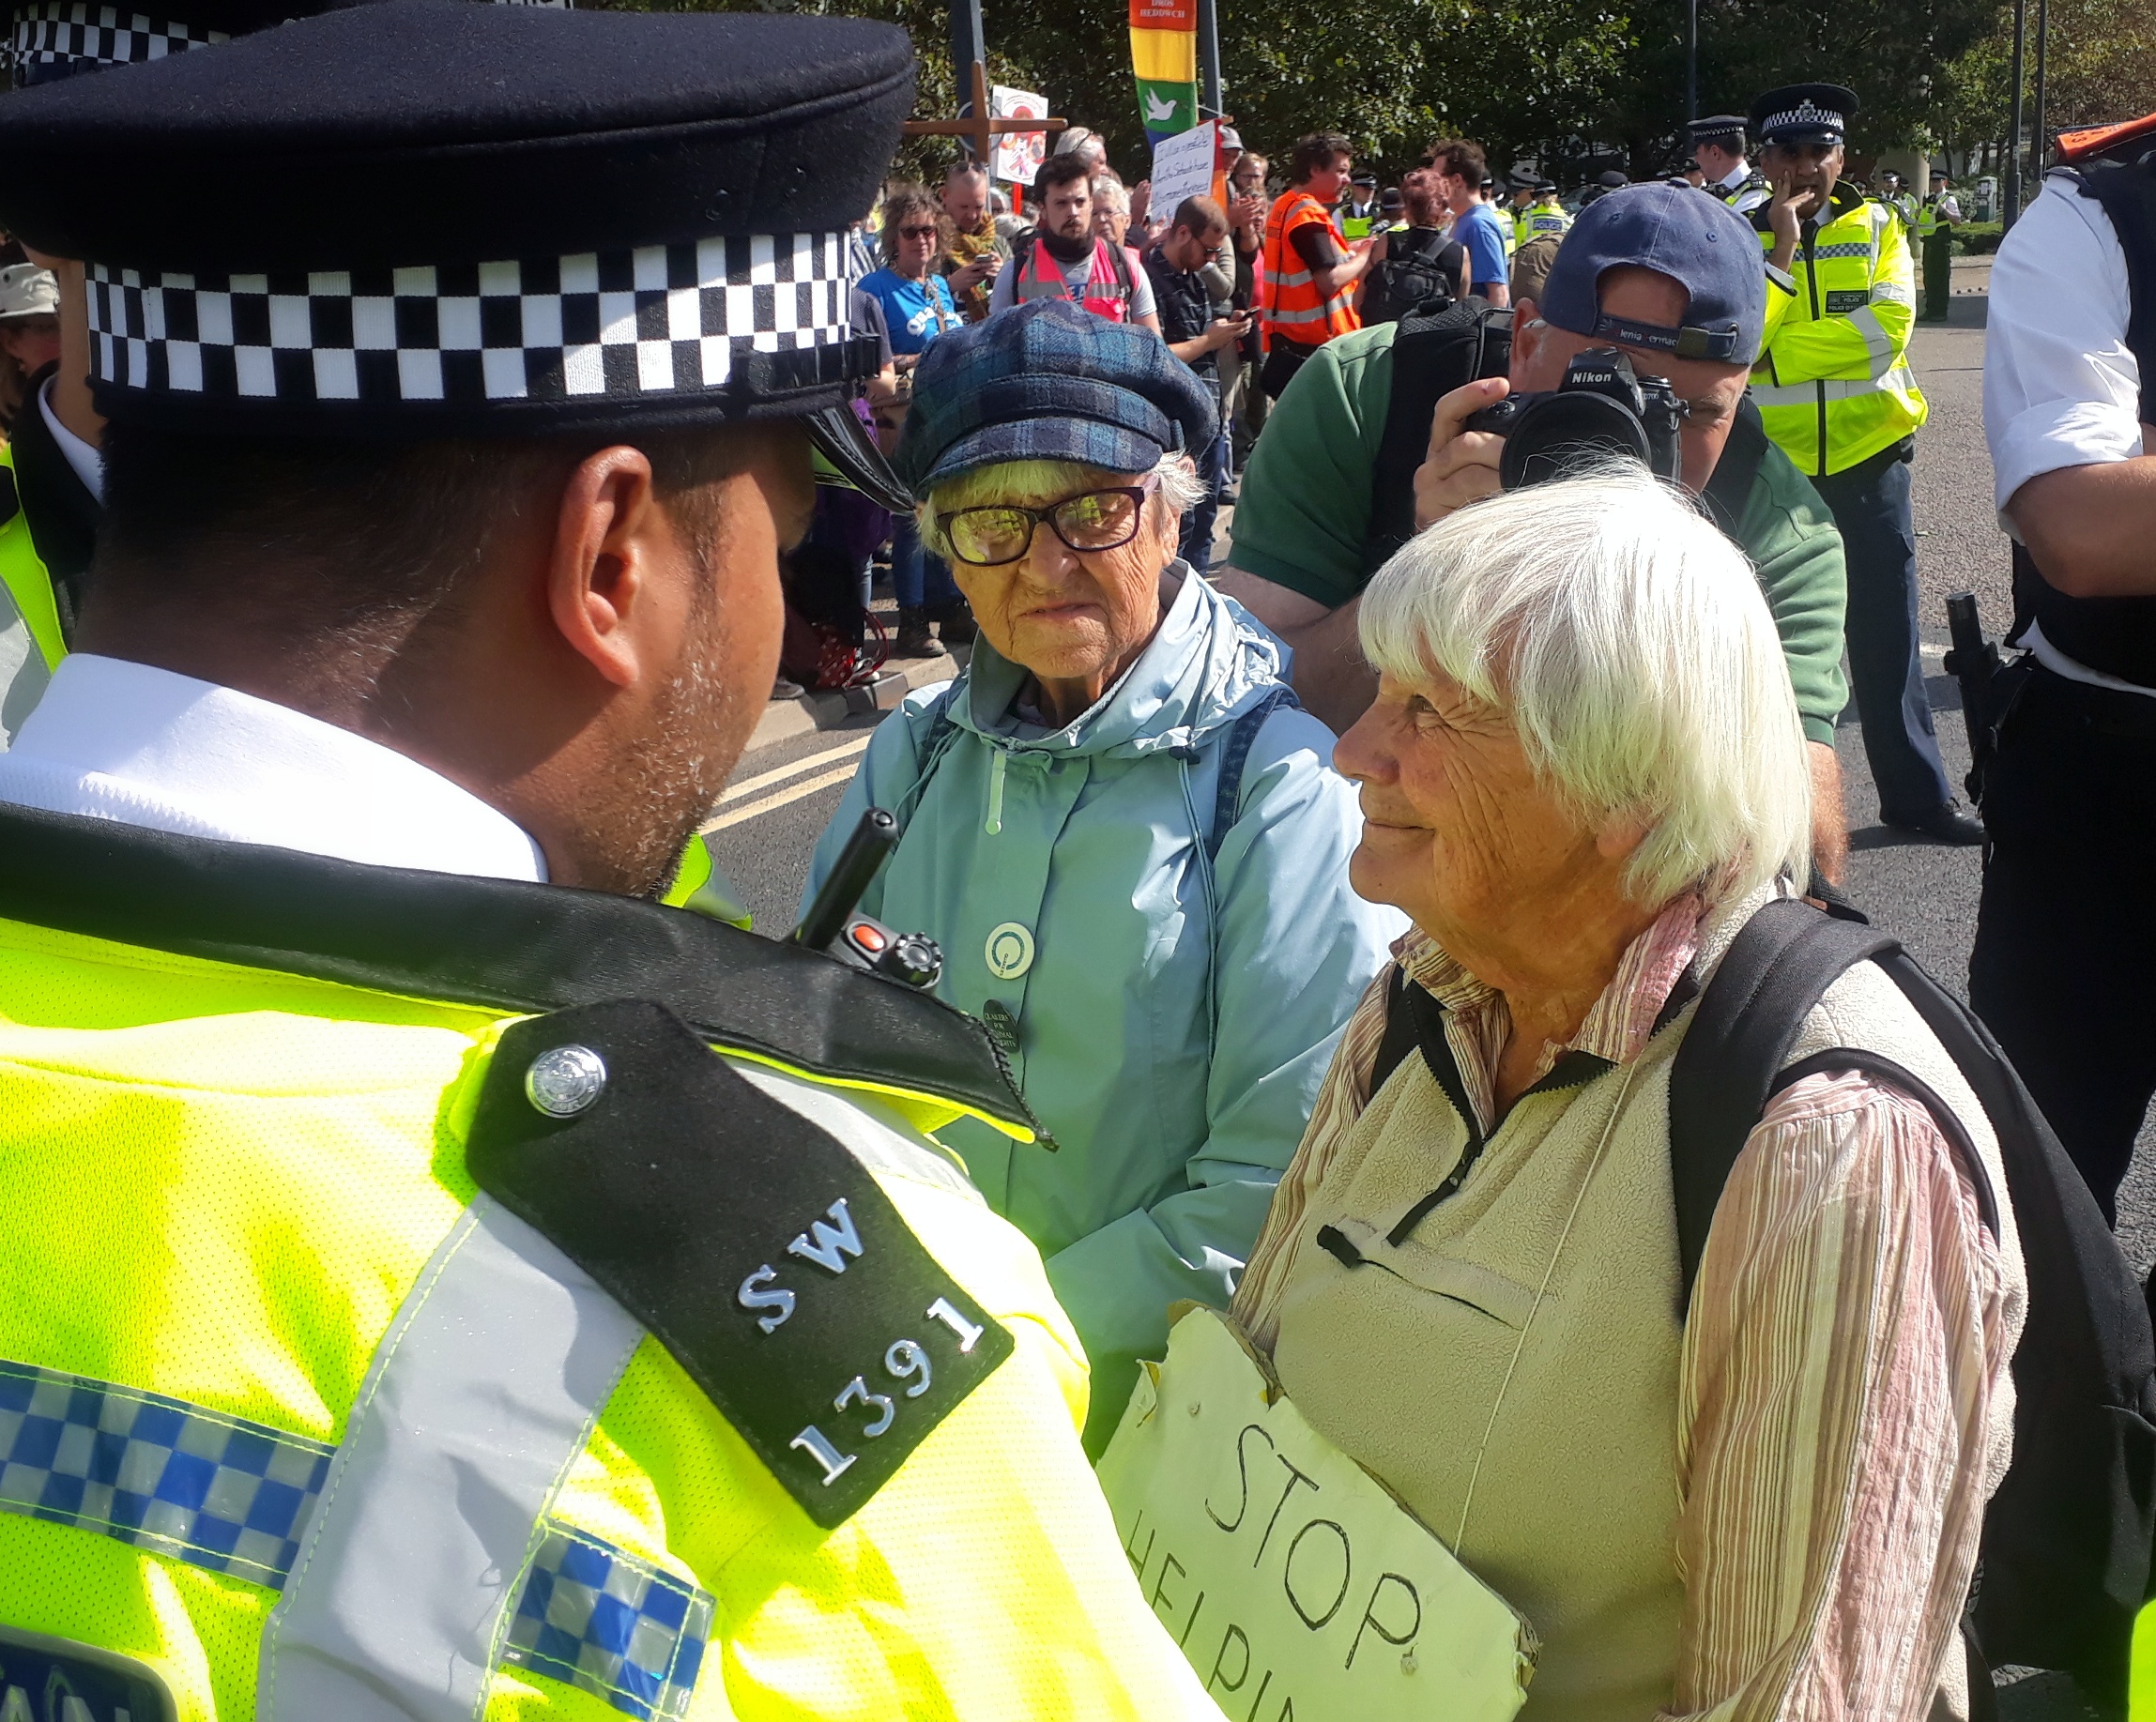 Quakers protest the DSEI arms fair in London